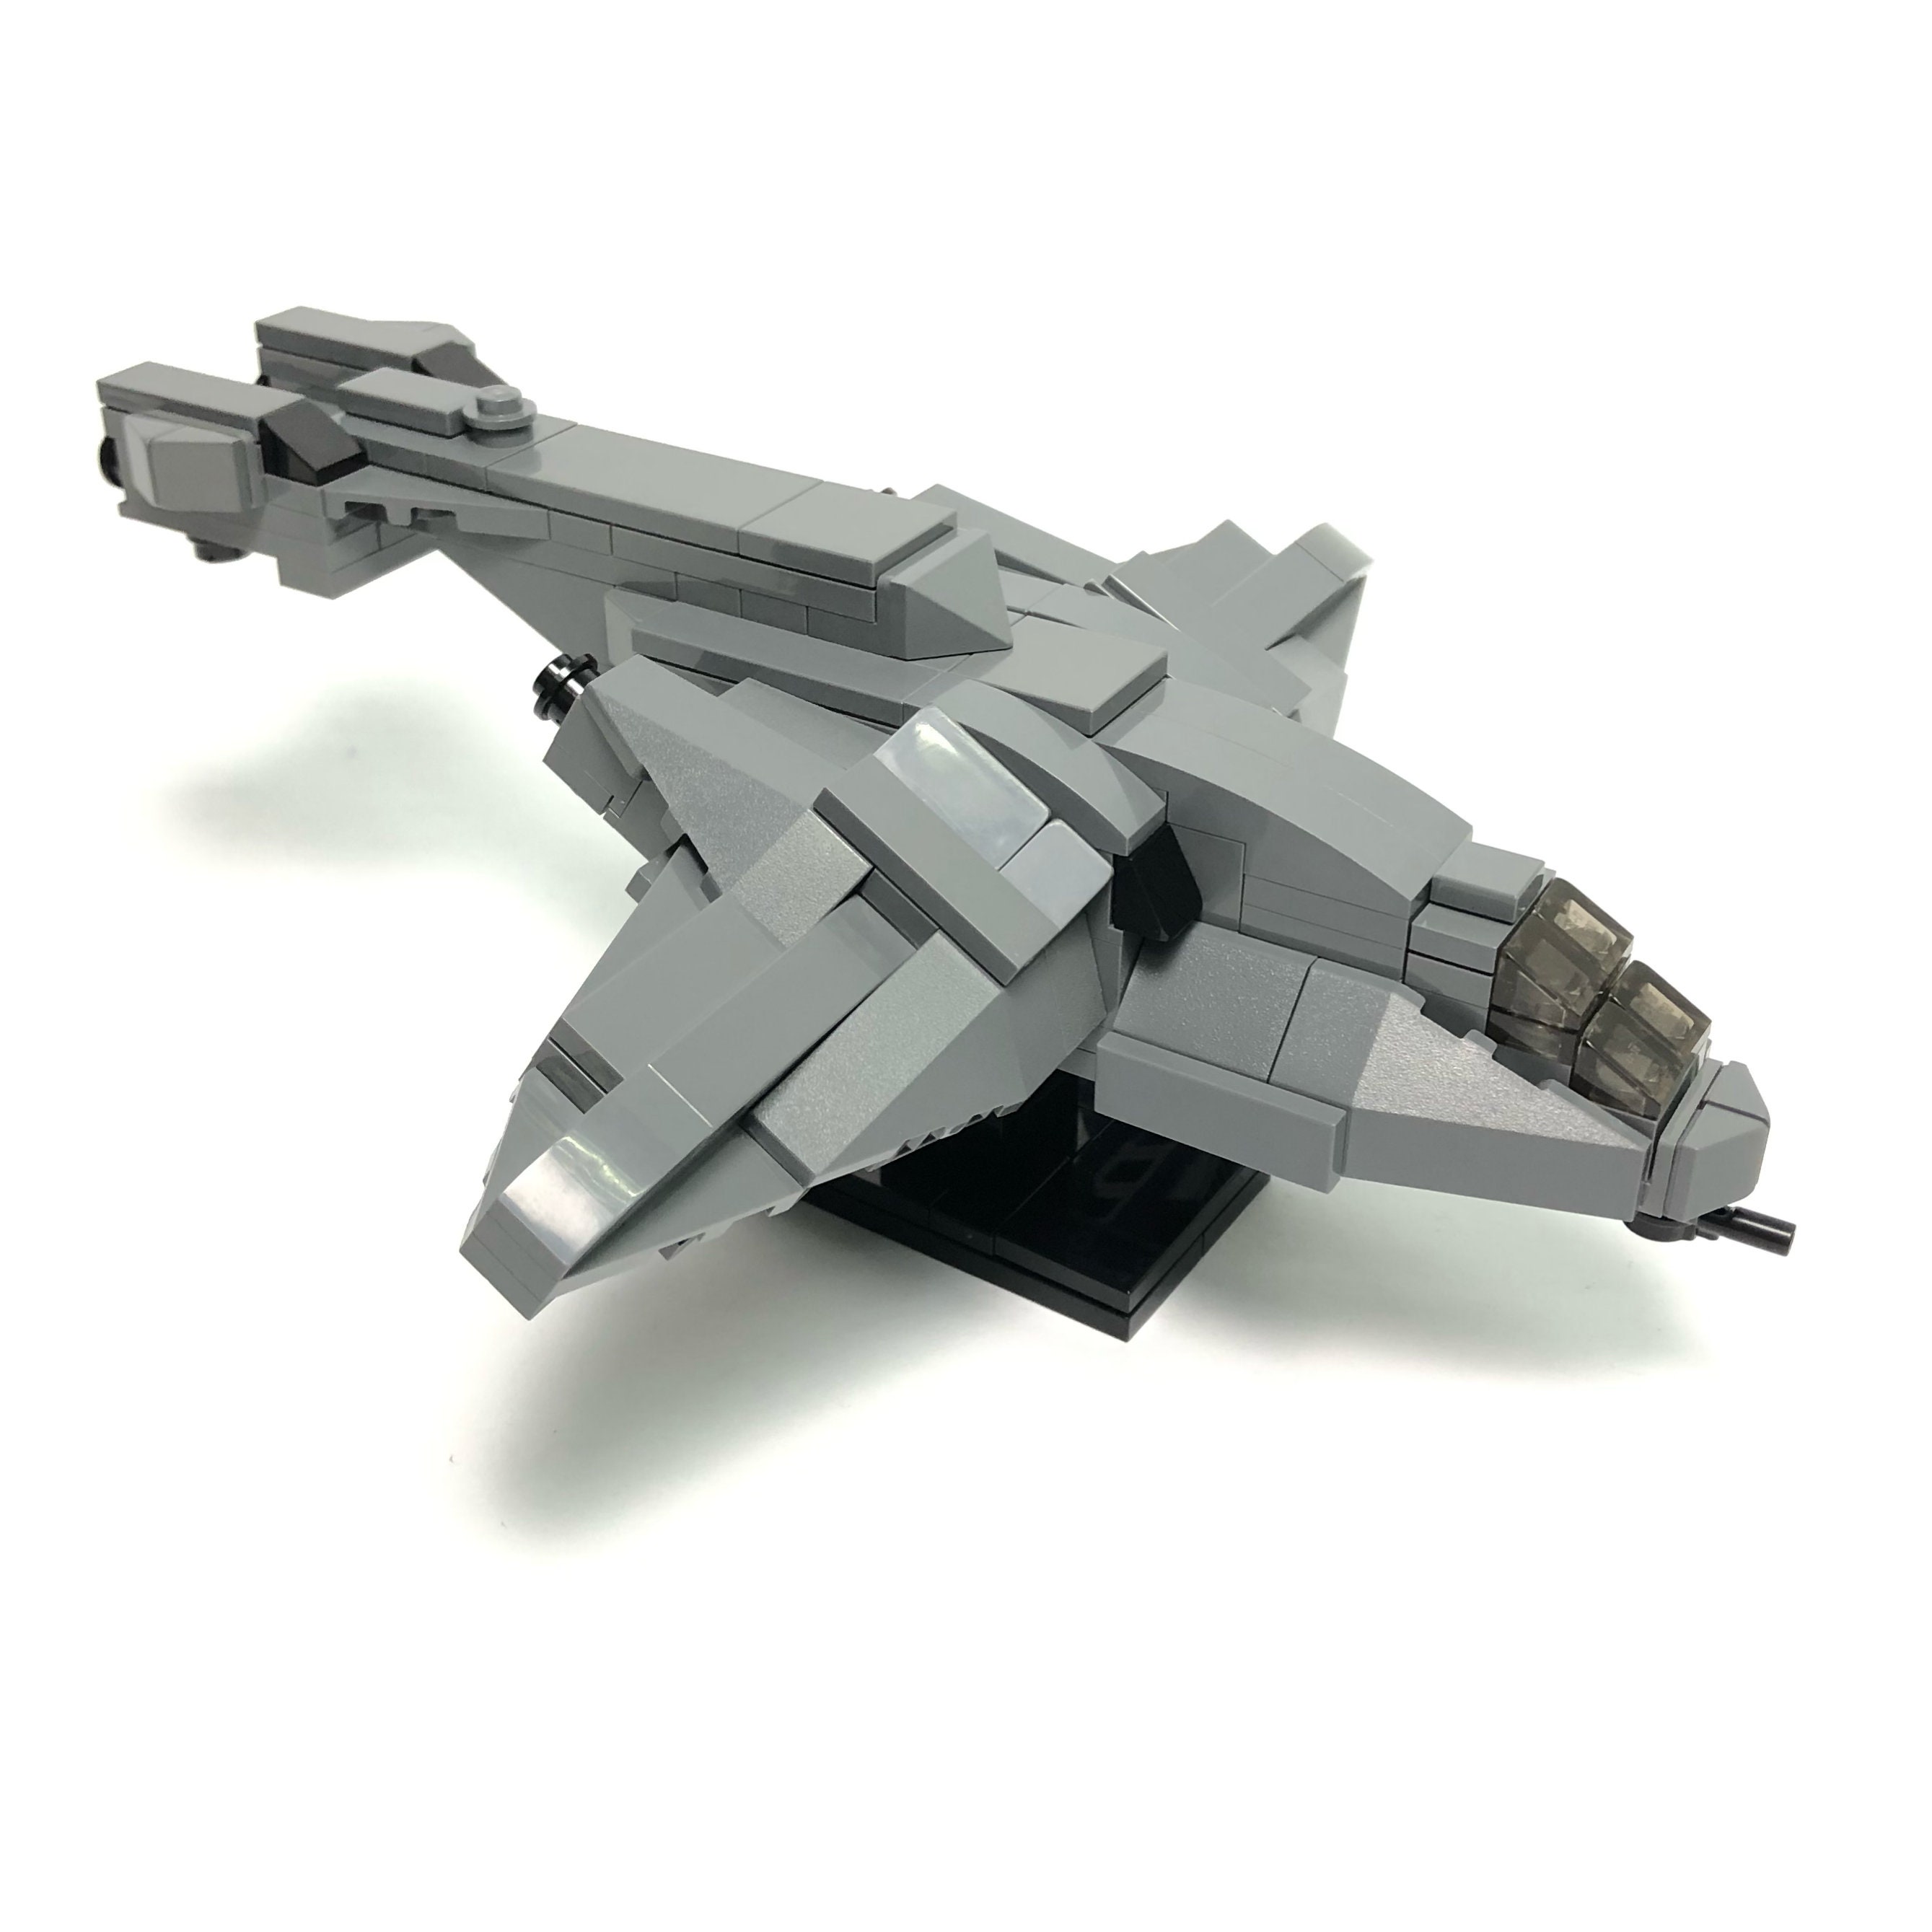 Pelican Dropship Custom Lego Model PDF Instructions - Etsy